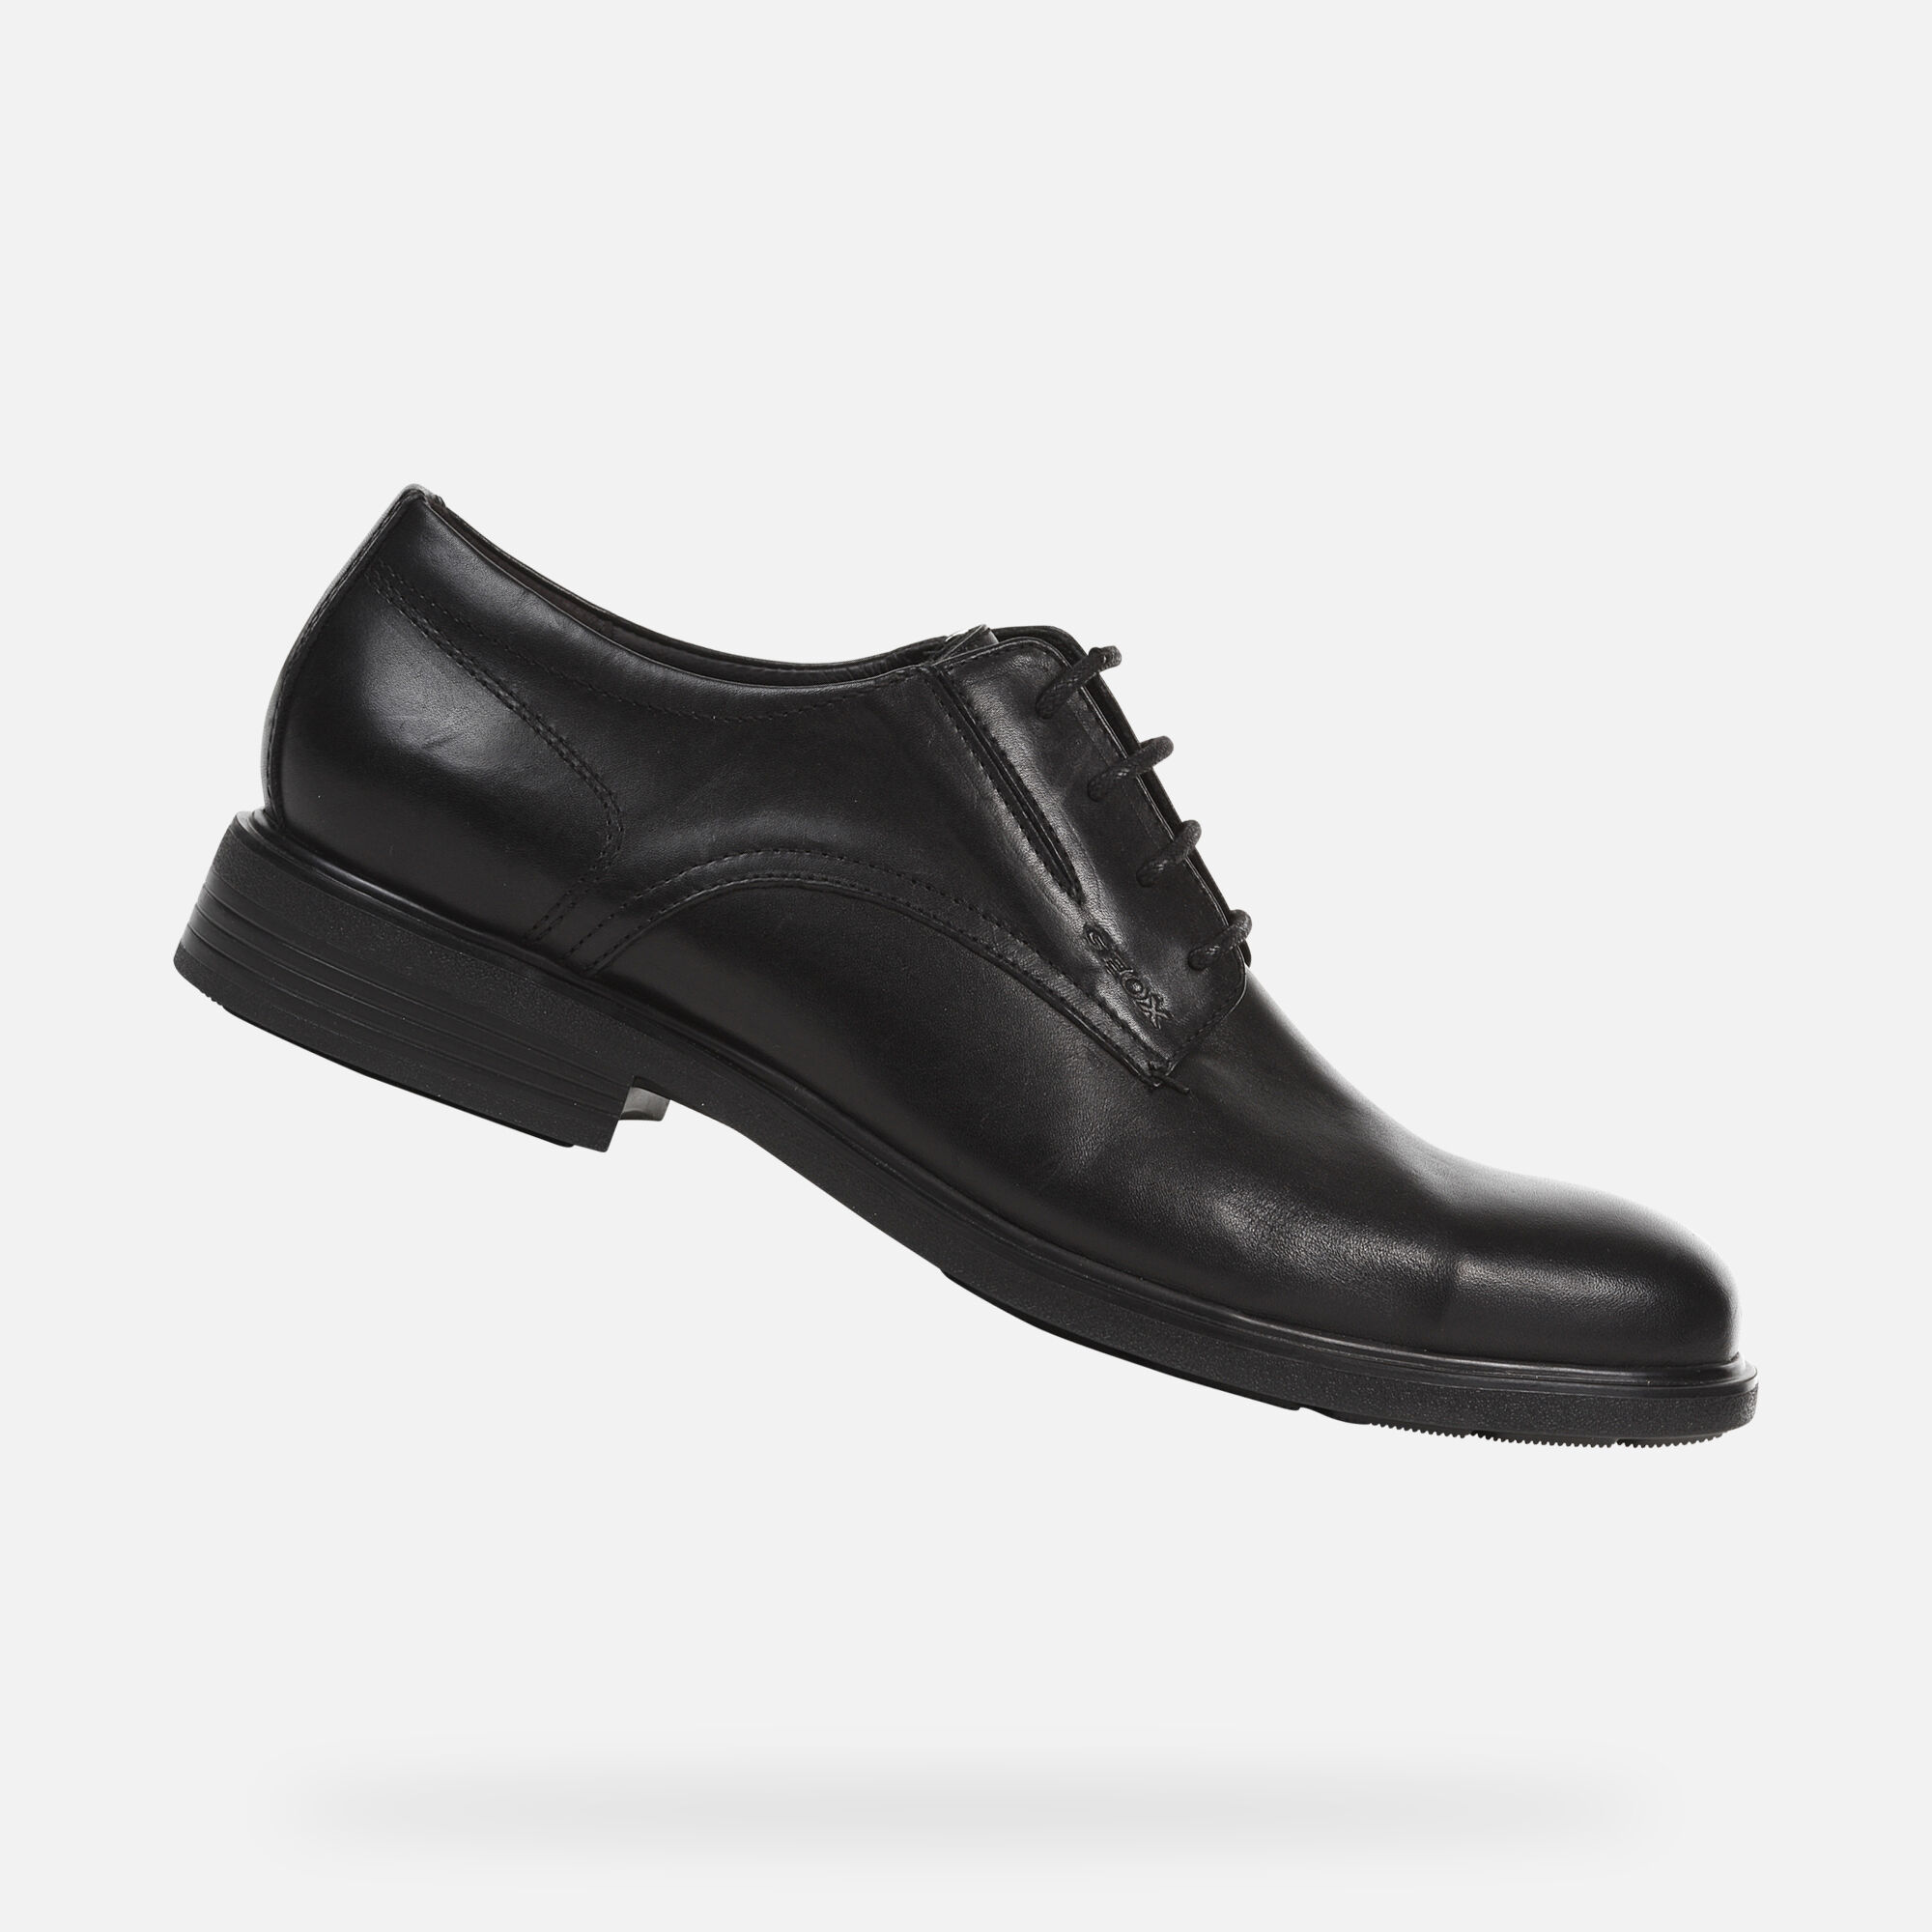 Geox DUBLIN Man Black Shoes | Geox ® FW 19/20